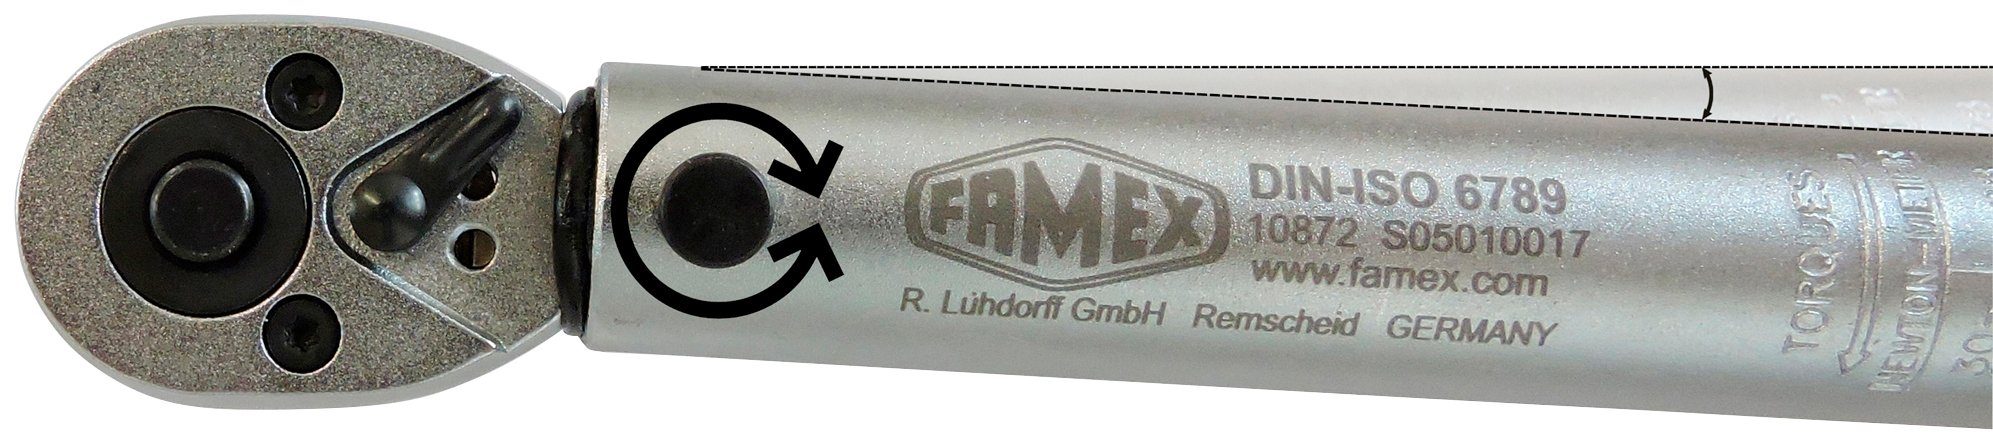 Pro FAMEX R+L Drehmomentschlüssel